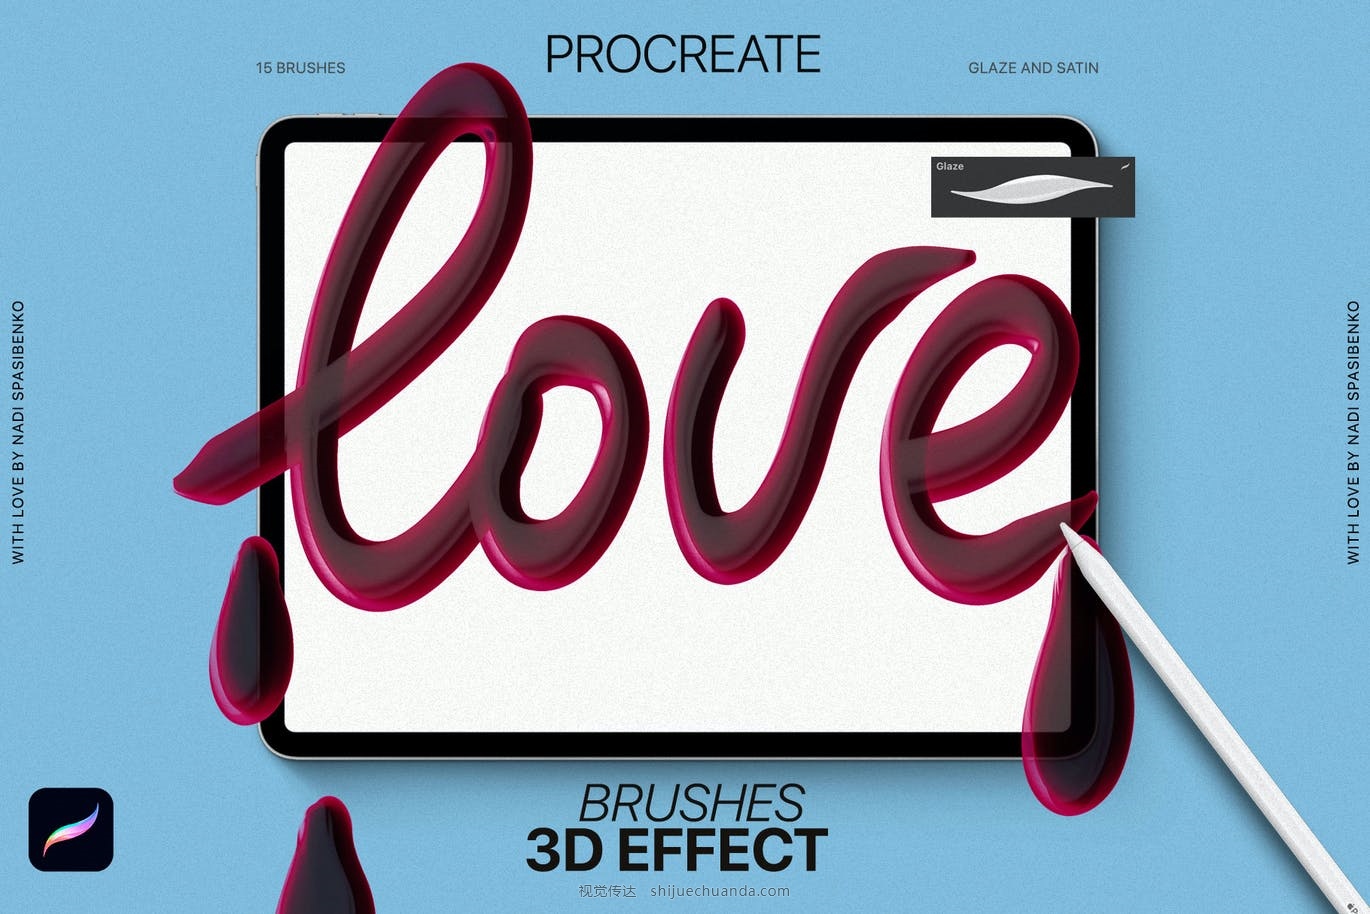 3D effect Procreate Brushes-15.jpg